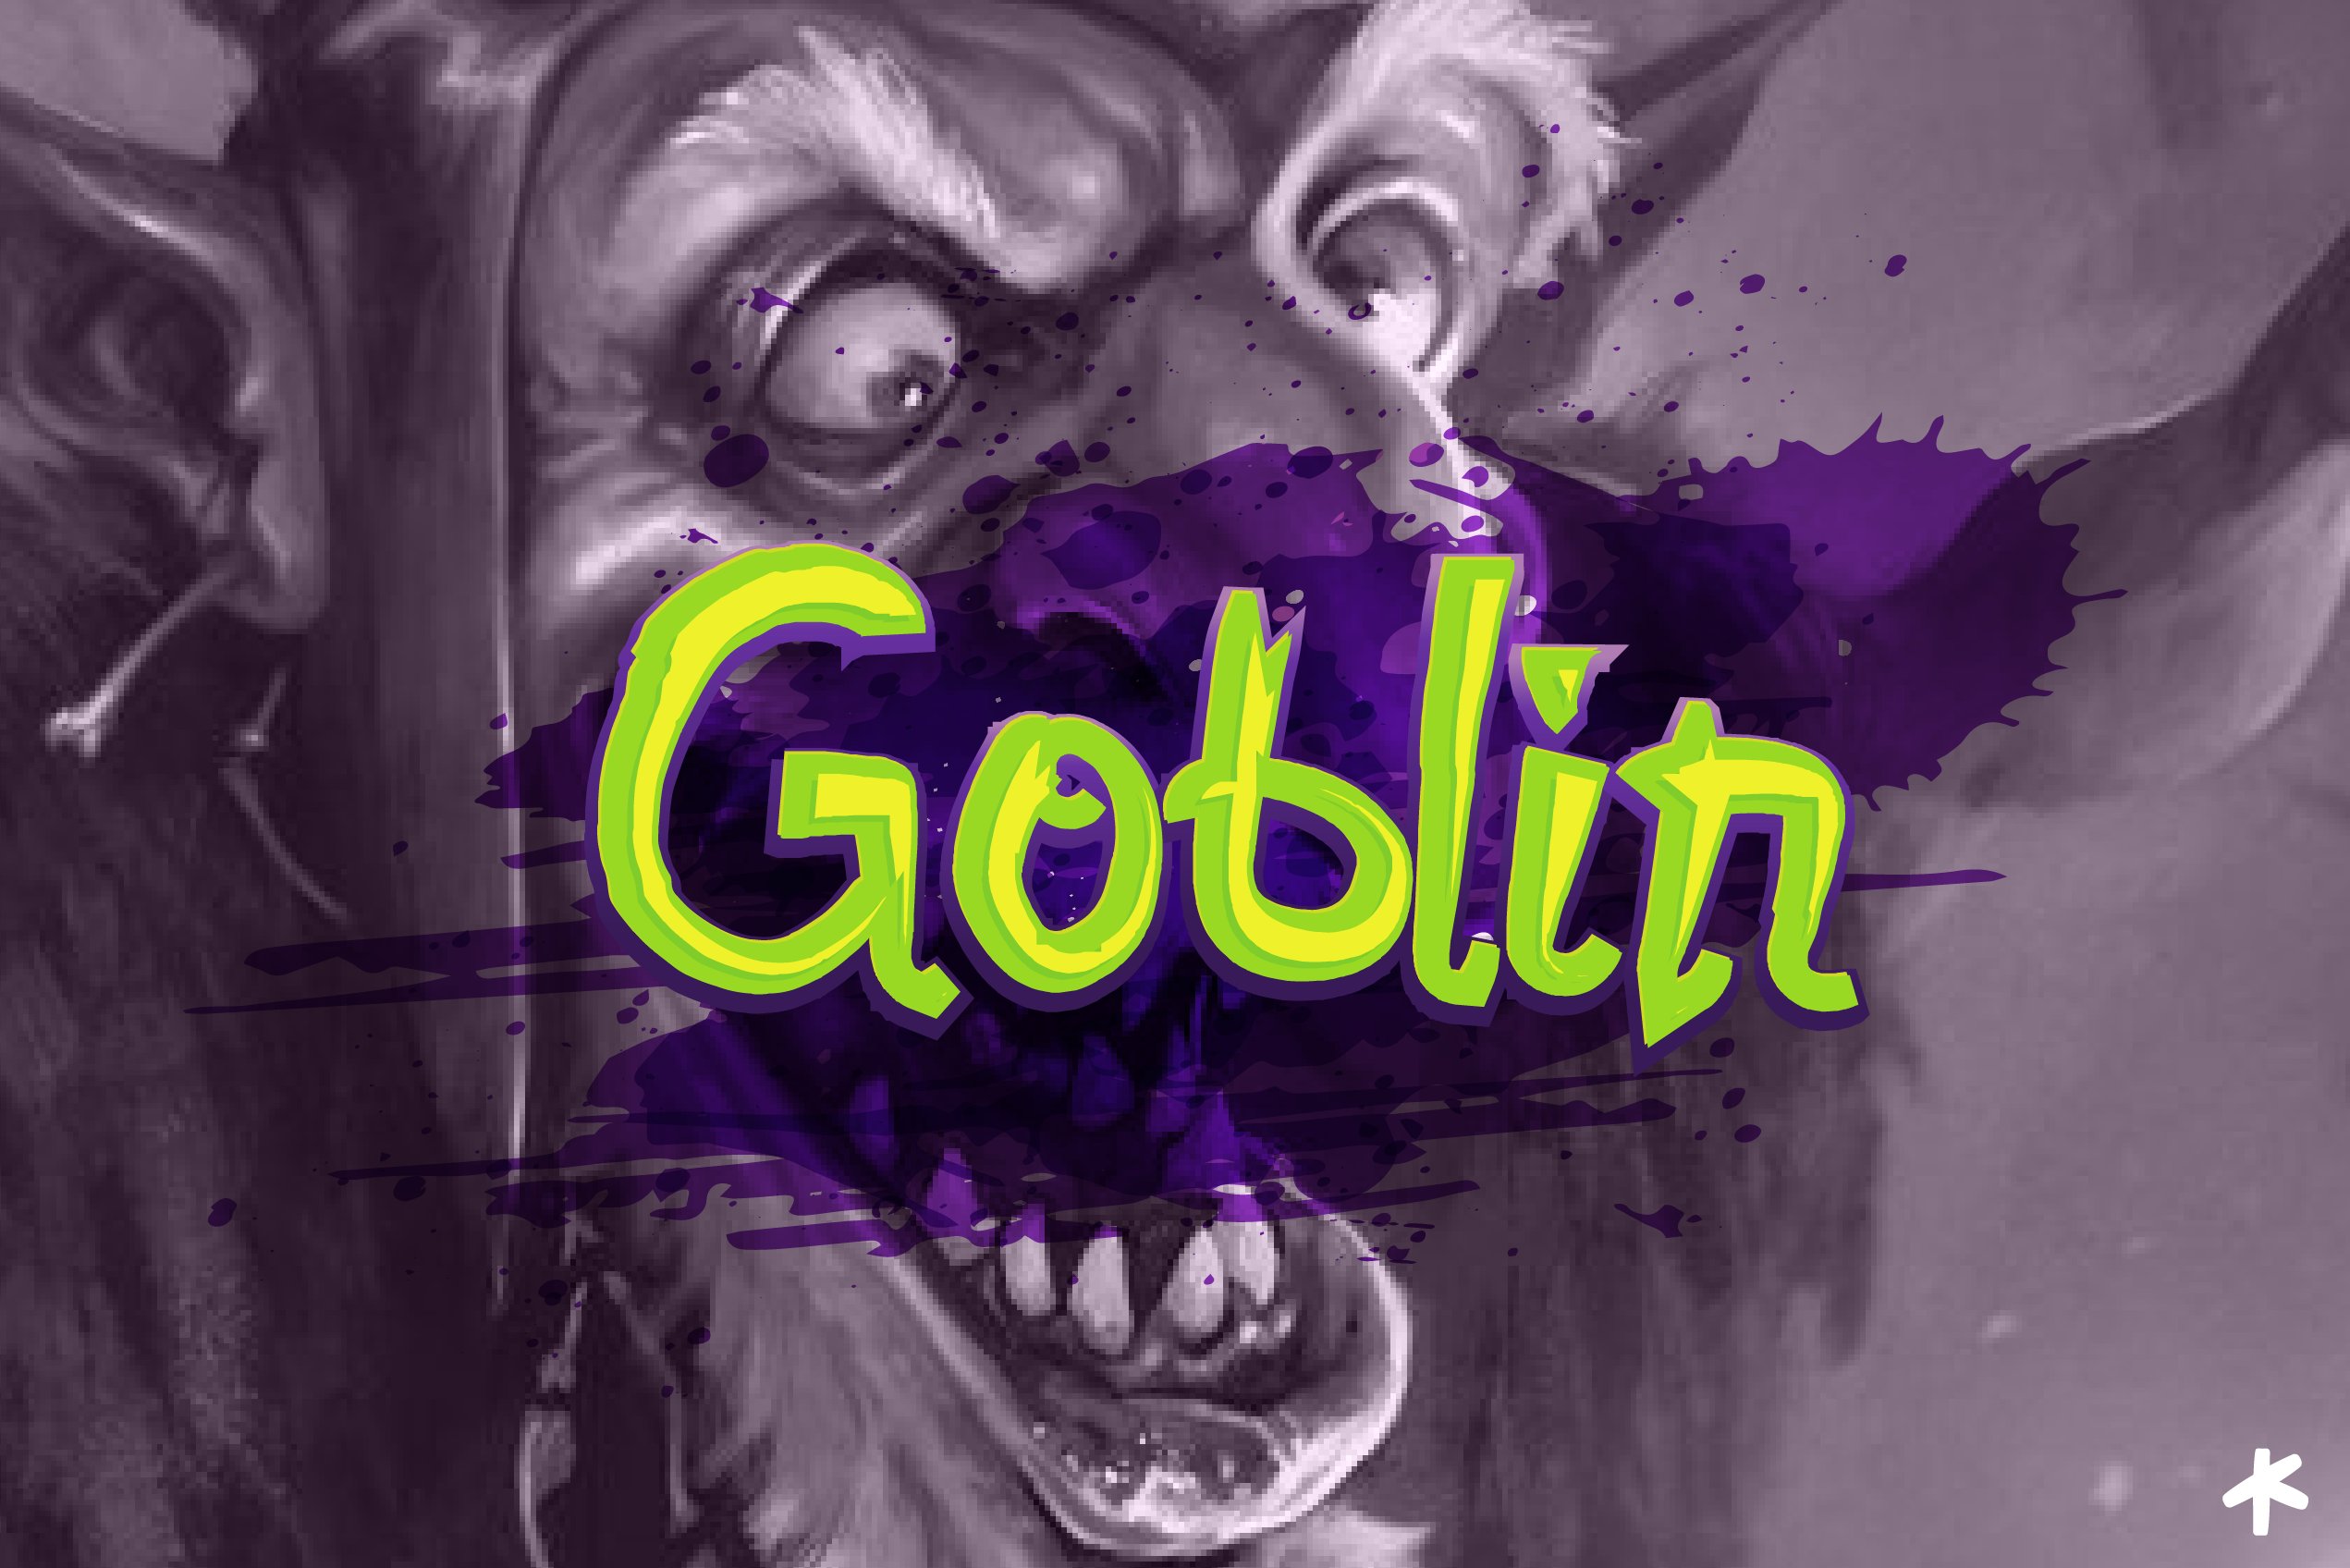 GOBLIN cover image.